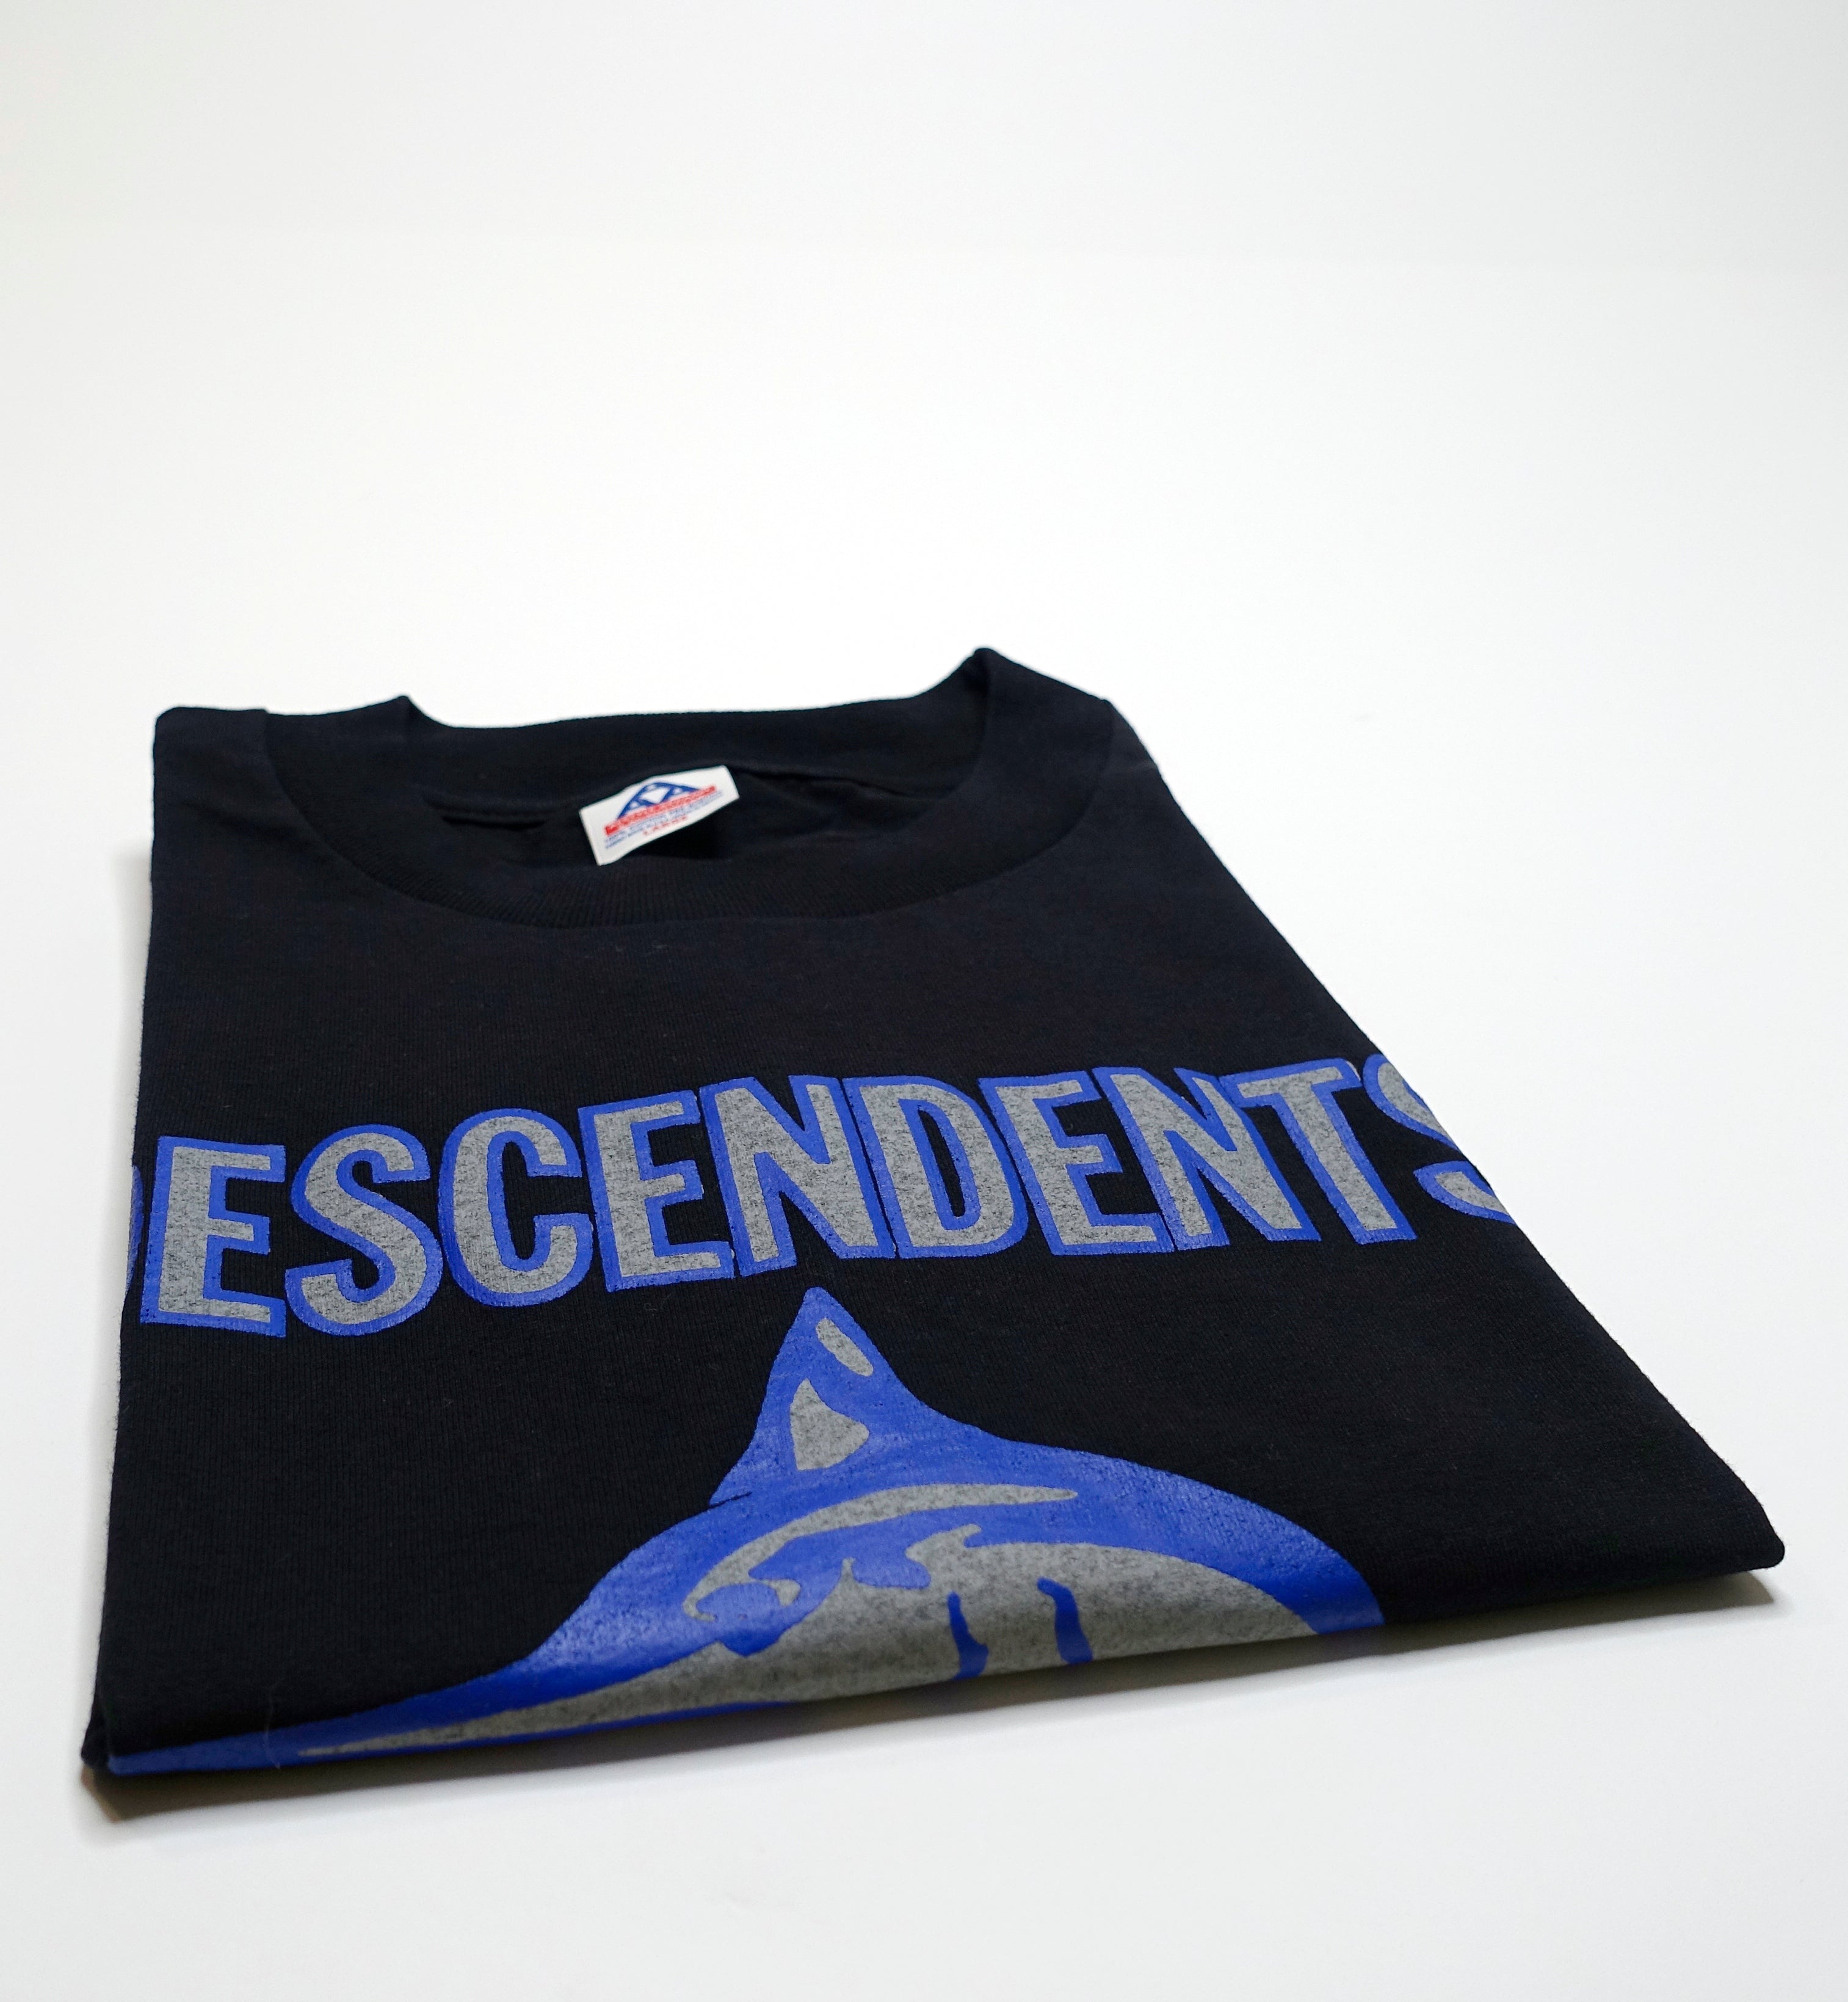 Descendents - Big Marlin 90's Tour Shirt Size Large